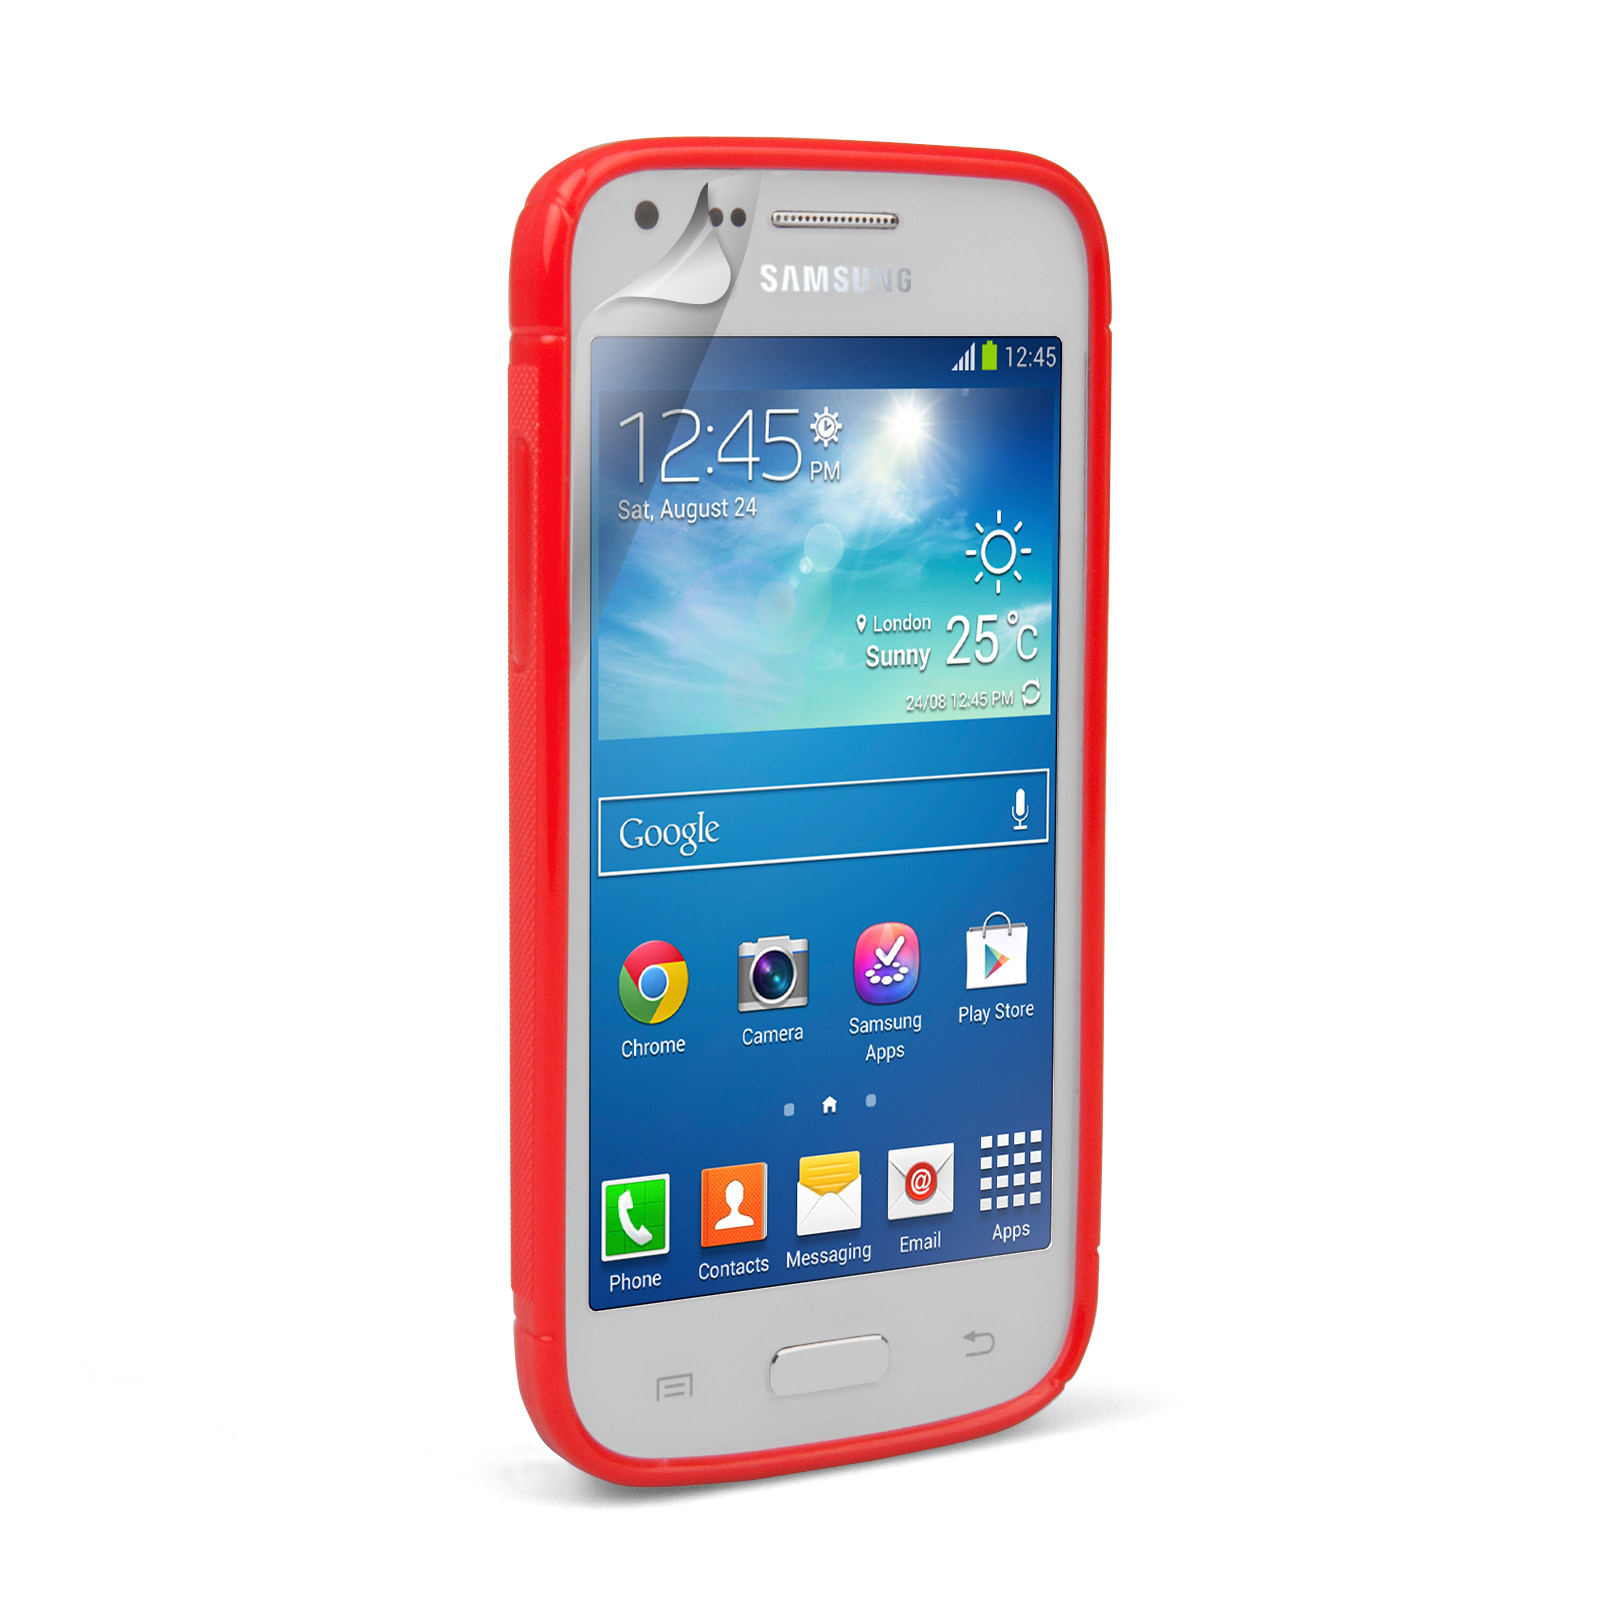 Caseflex Samsung Galaxy Core Plus Silicone Gel S-Line Case - Red